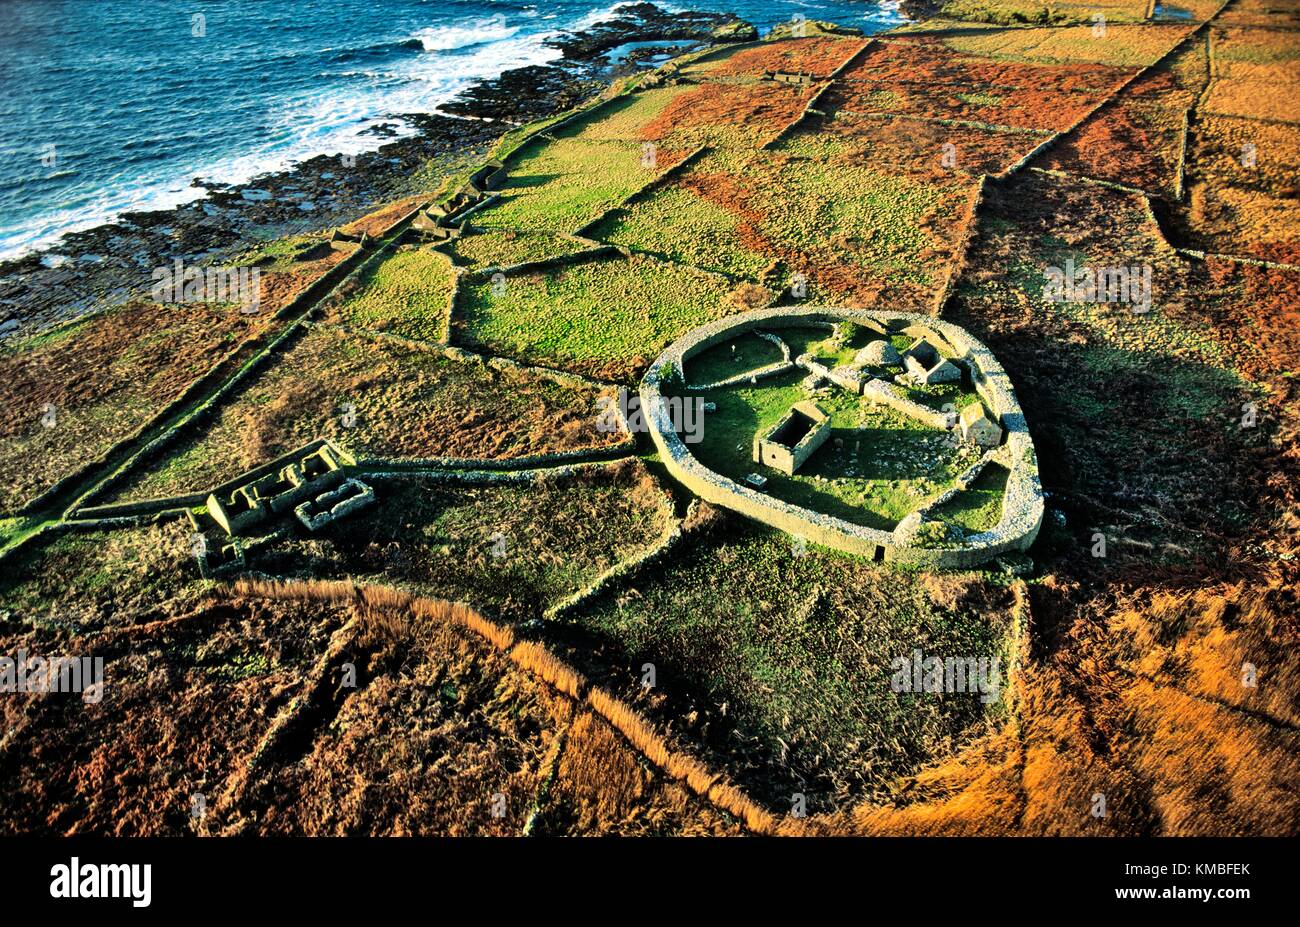 Inishmurray island, County Sligo, Ireland. Early Celtic Christian ring fort cashel monastic settlement and fisherman's cottage. Stock Photo